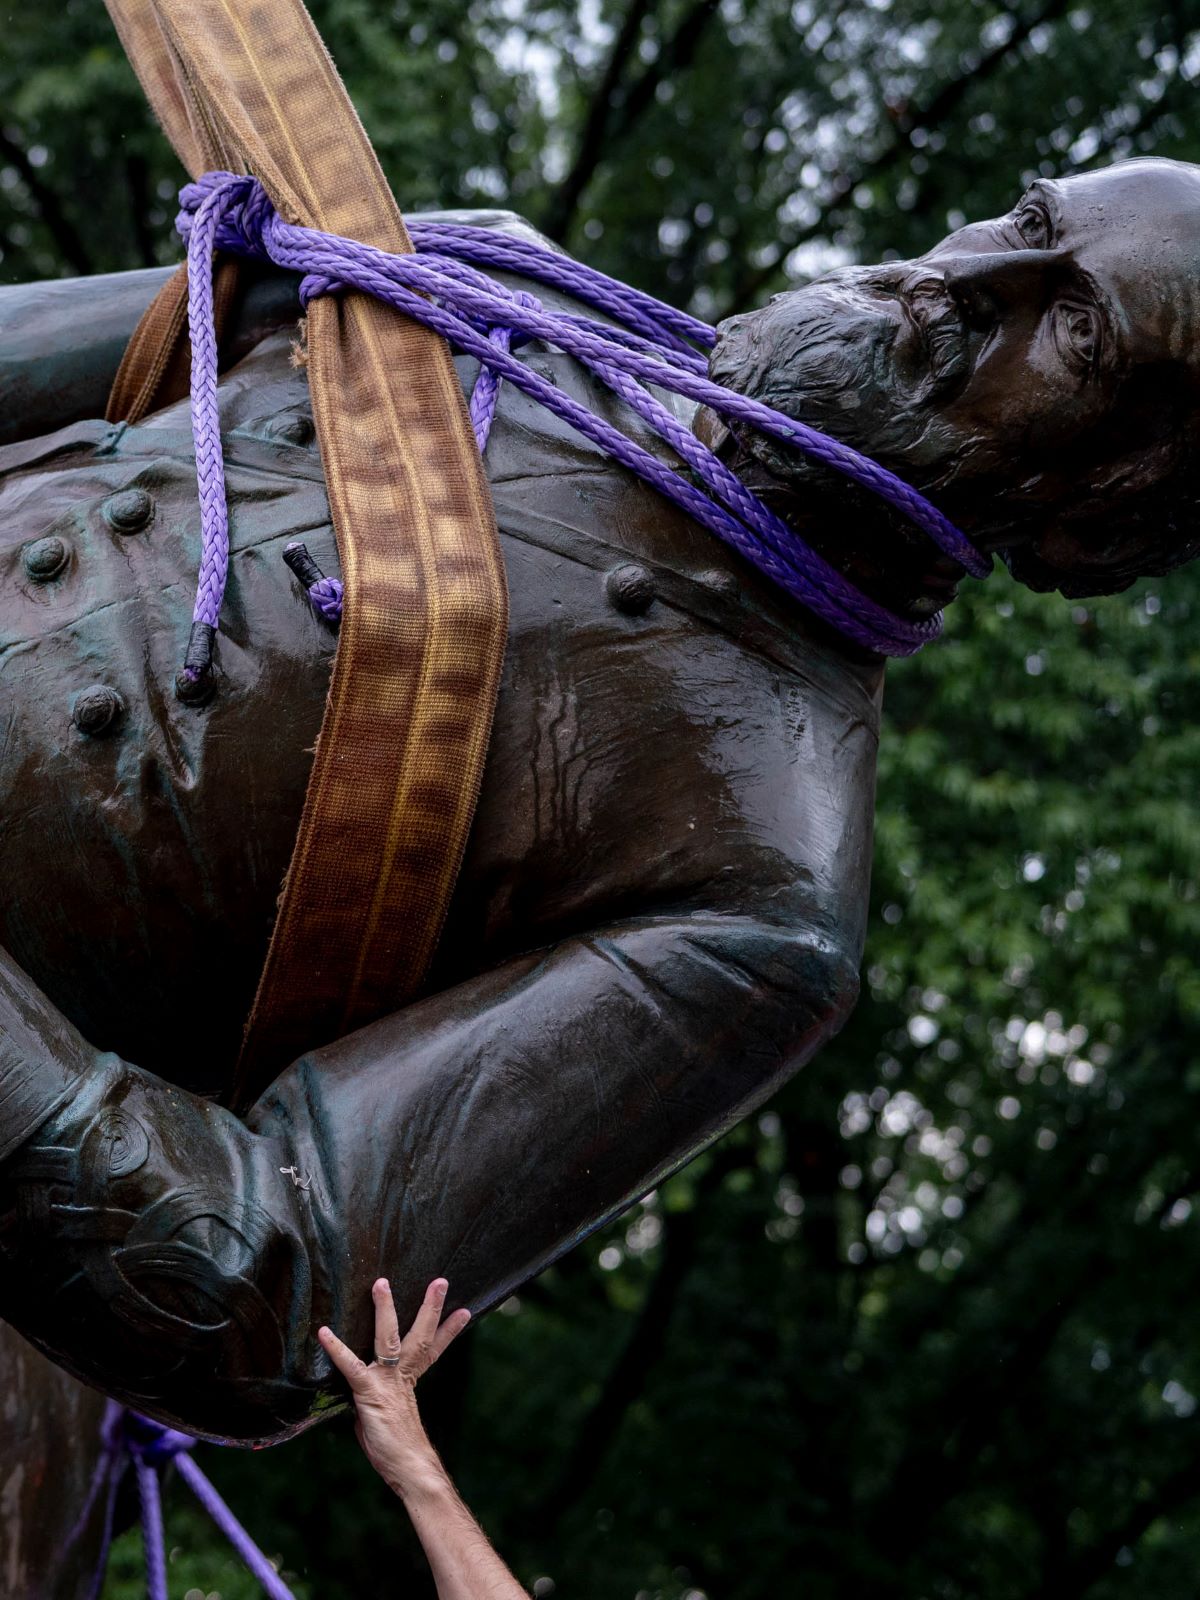 Stonewall Jackson with purple rope and hoist around neck,, Richmond, Virginia, July 1, 2020